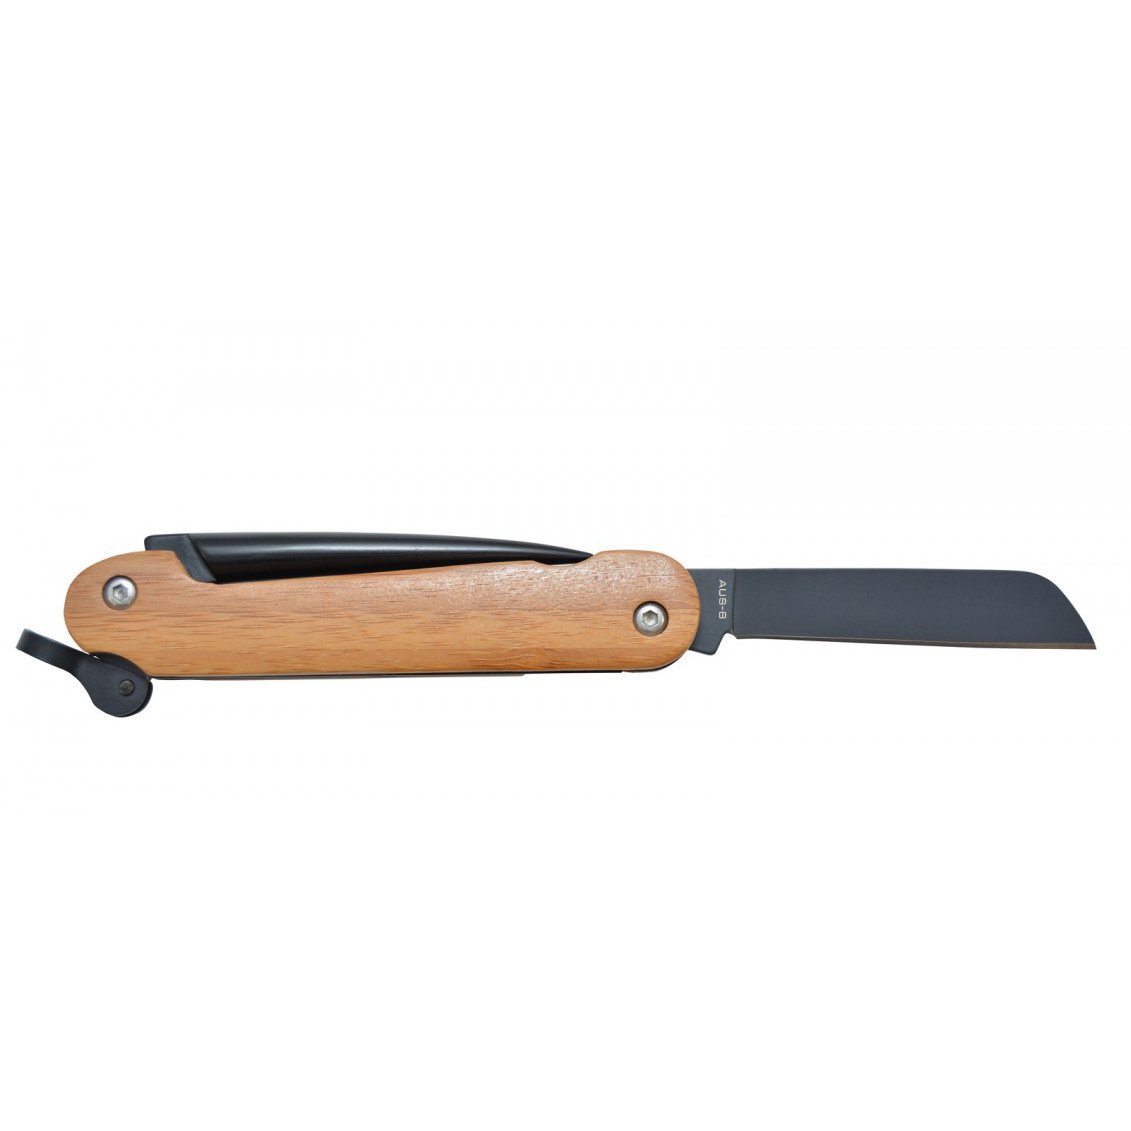 Нож складной Camillus Nautical Sailing Knife with Marlin Spike, Carbonitride Titanium® Aus-8 Steel, Bamboo Handles 6.4 см. - фото 5